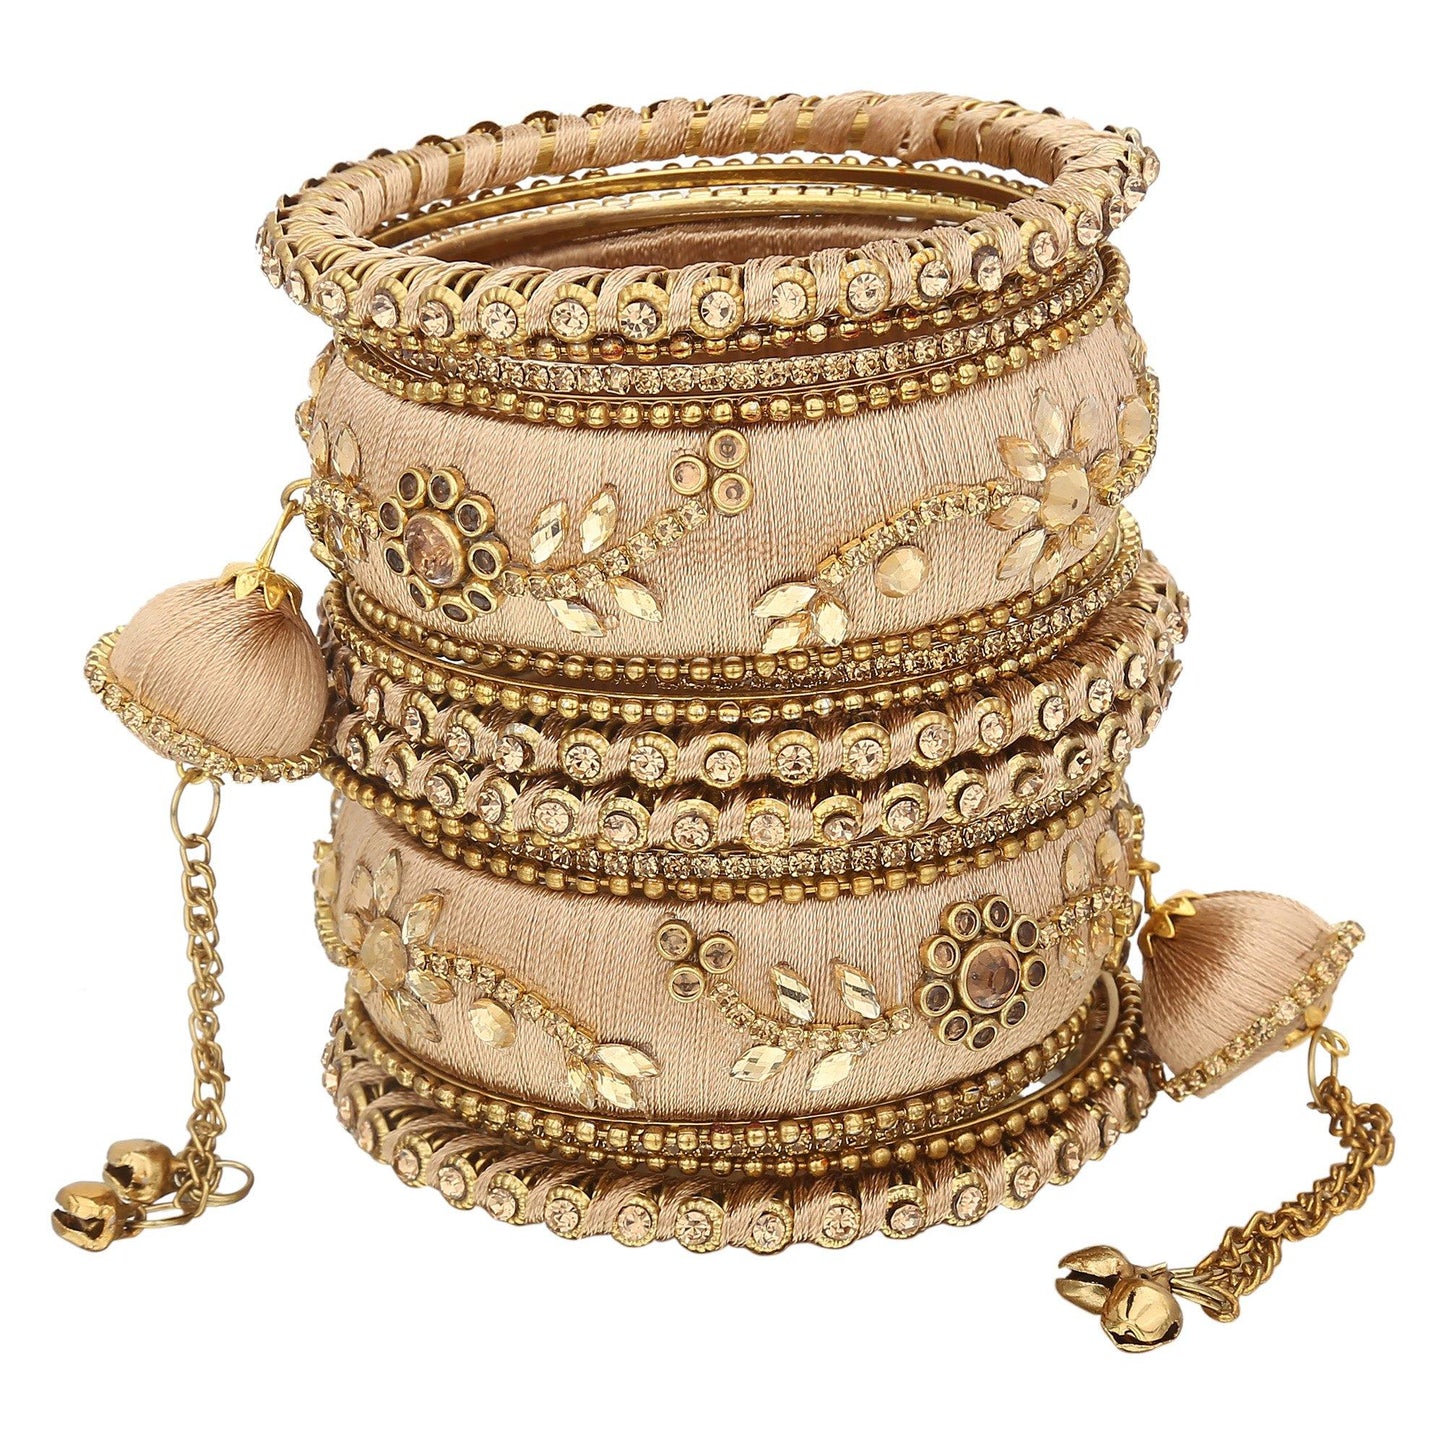 sukriti party wear silk thread tassel latkan gold bangles jewelry for girls & women – set of 18